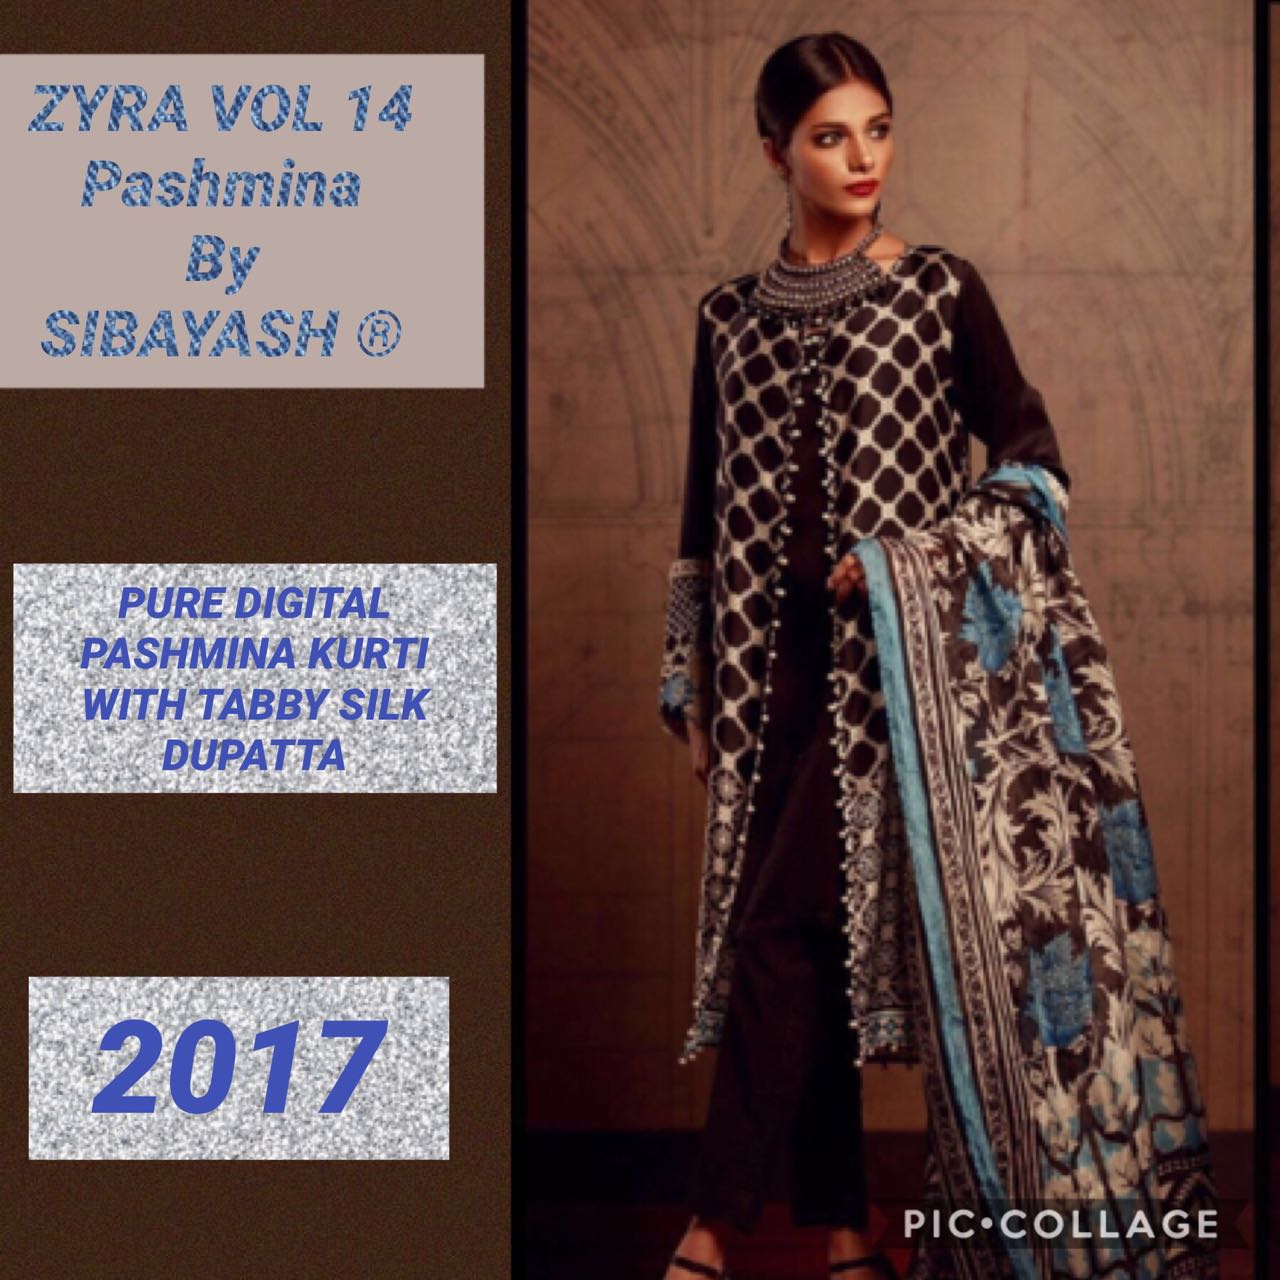 Zyra Vol-14 By Sibayash Pakistani Stylish Beautiful Colorful Party Wear & Occasional Wear Fancy Pure Pashmina Dresses At Wholesale Price